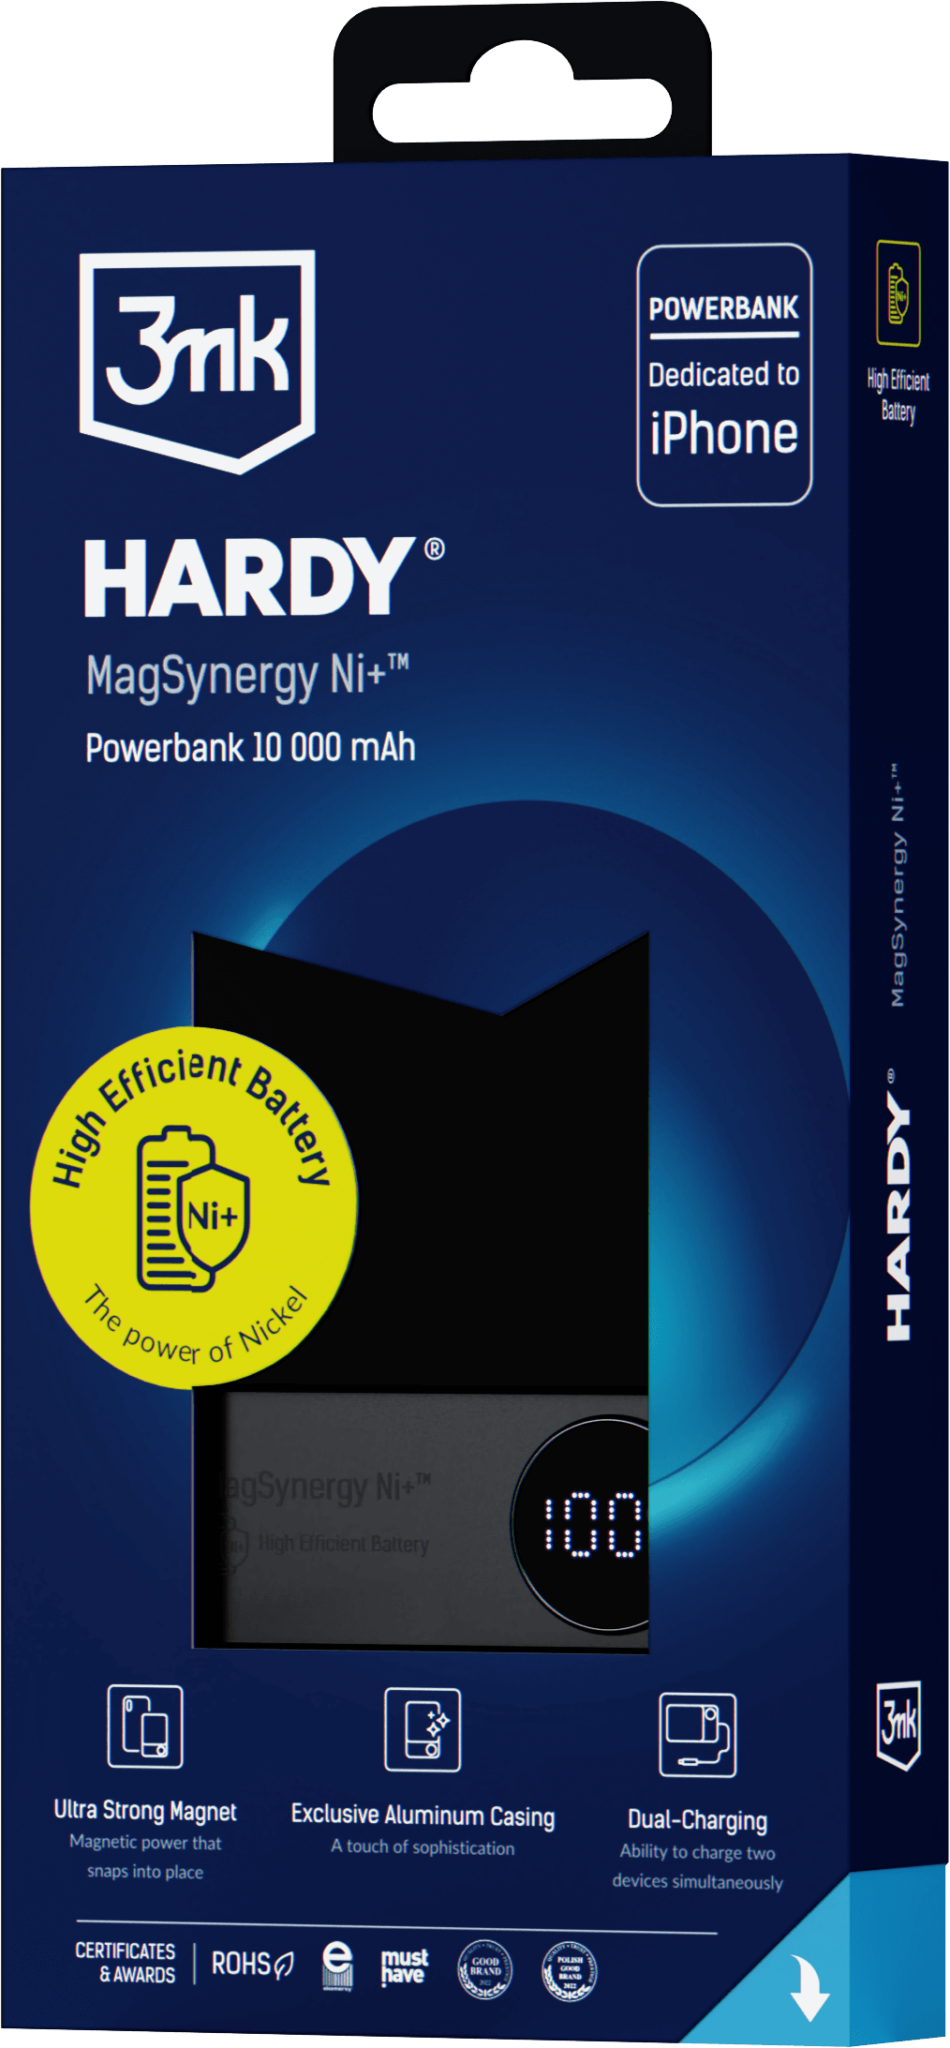 3mk-hardy-magsynergy-ni-plus-packshot-1-950x2048